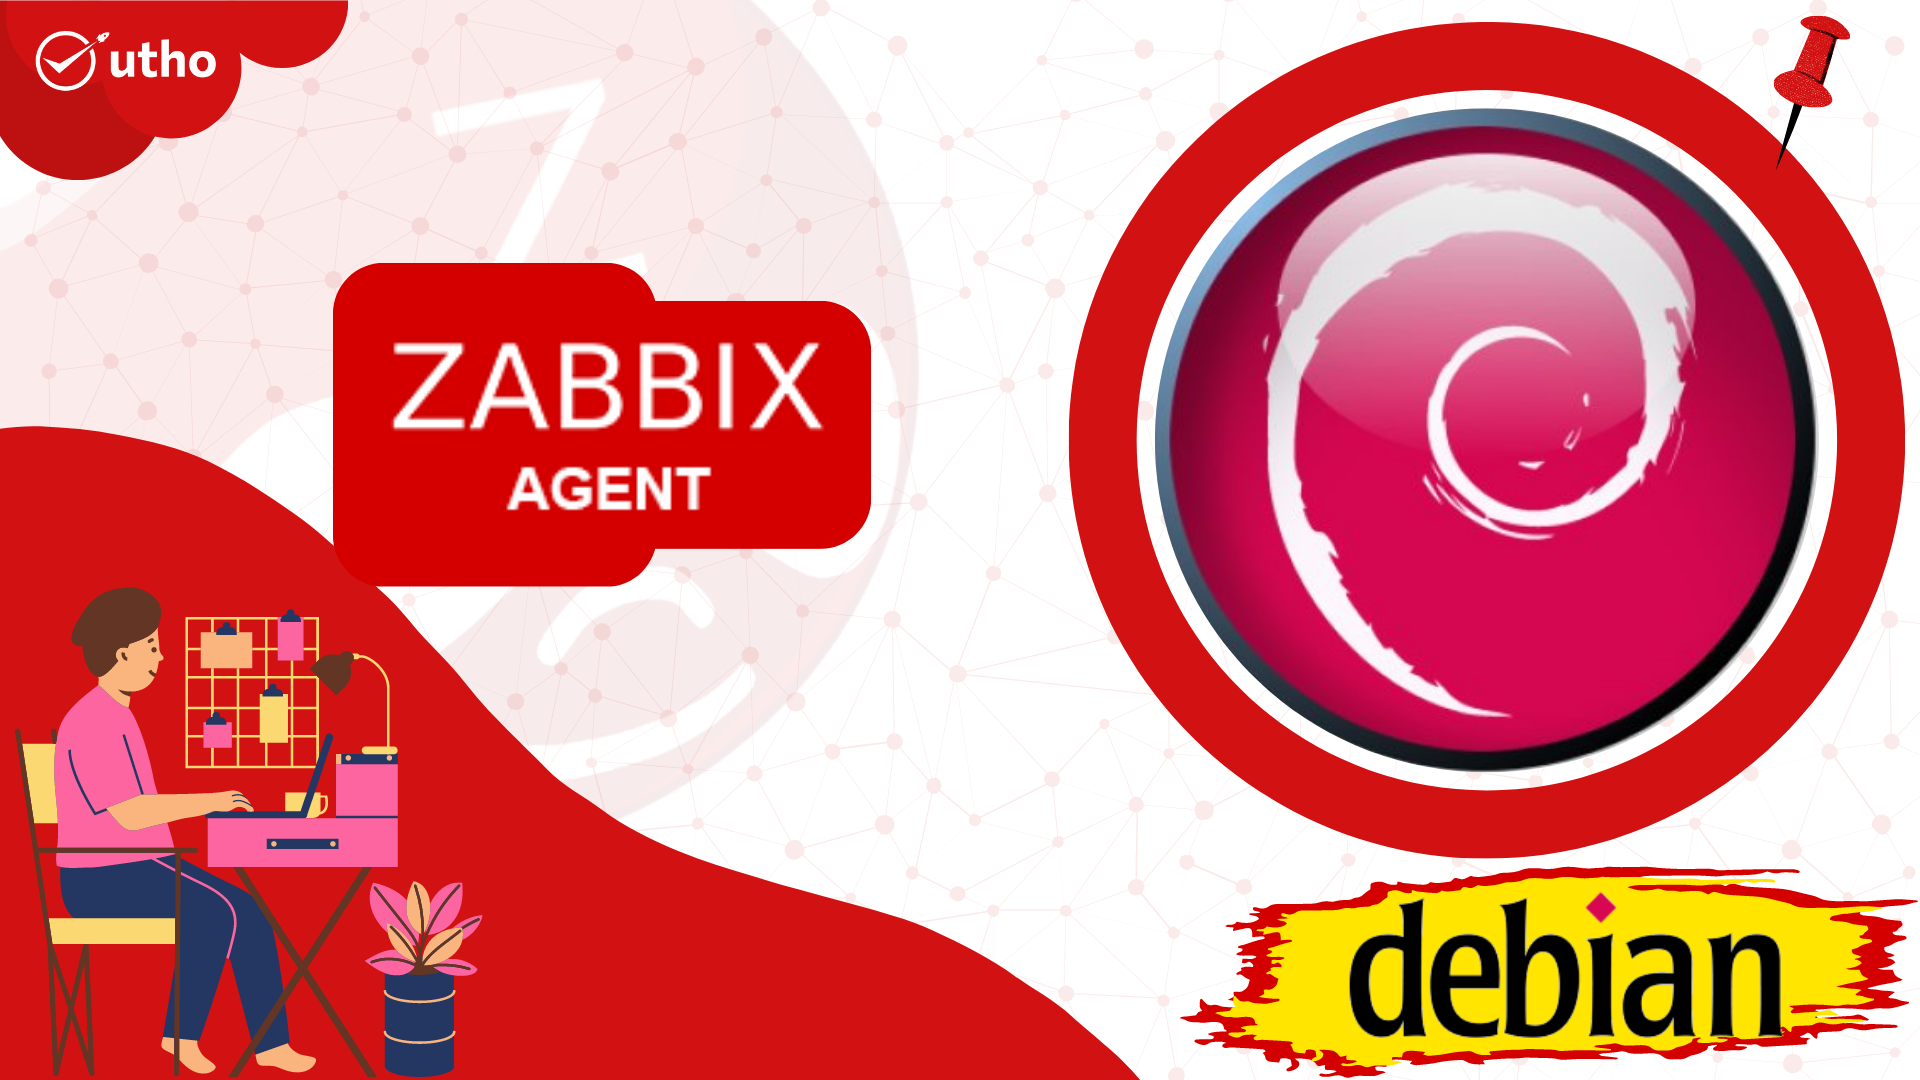 How to install Zabbix agent on Debian